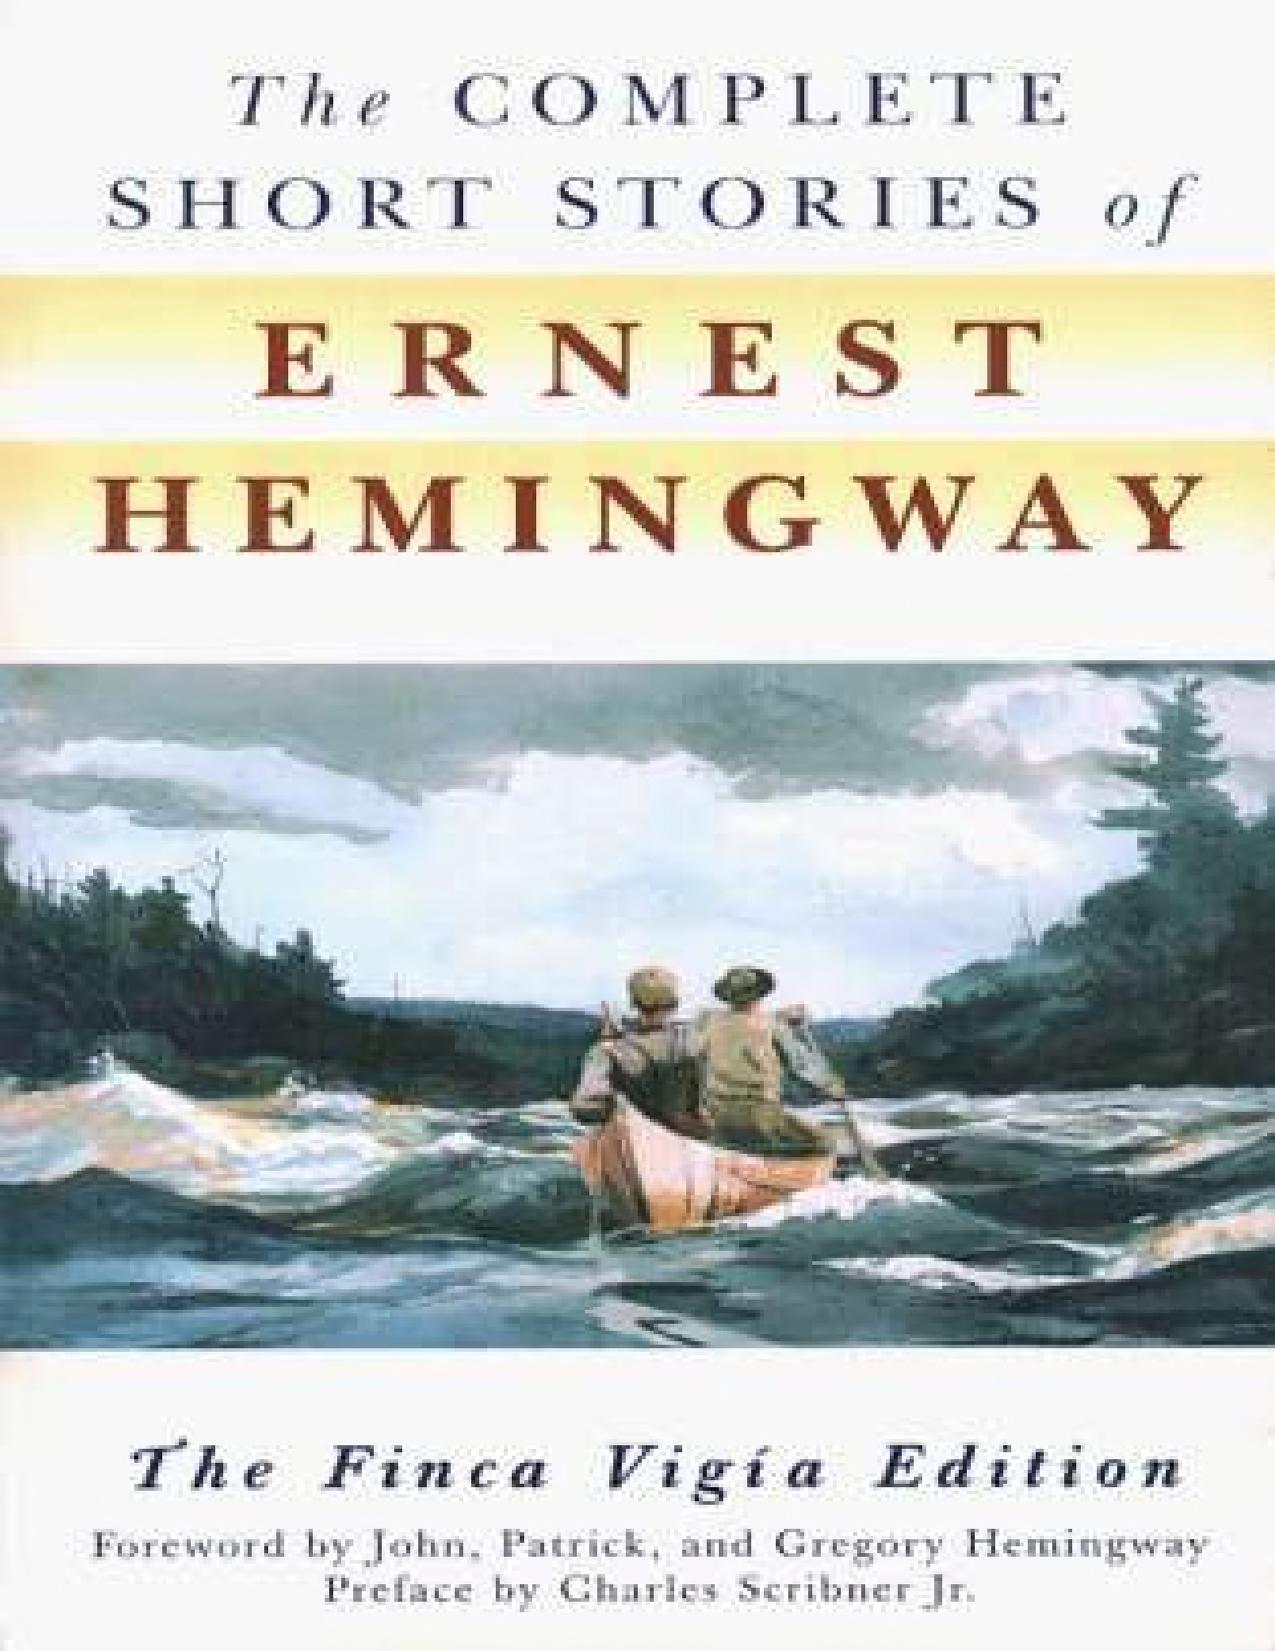 Ernest hemingway books pdf free download forge 1.12 2 download